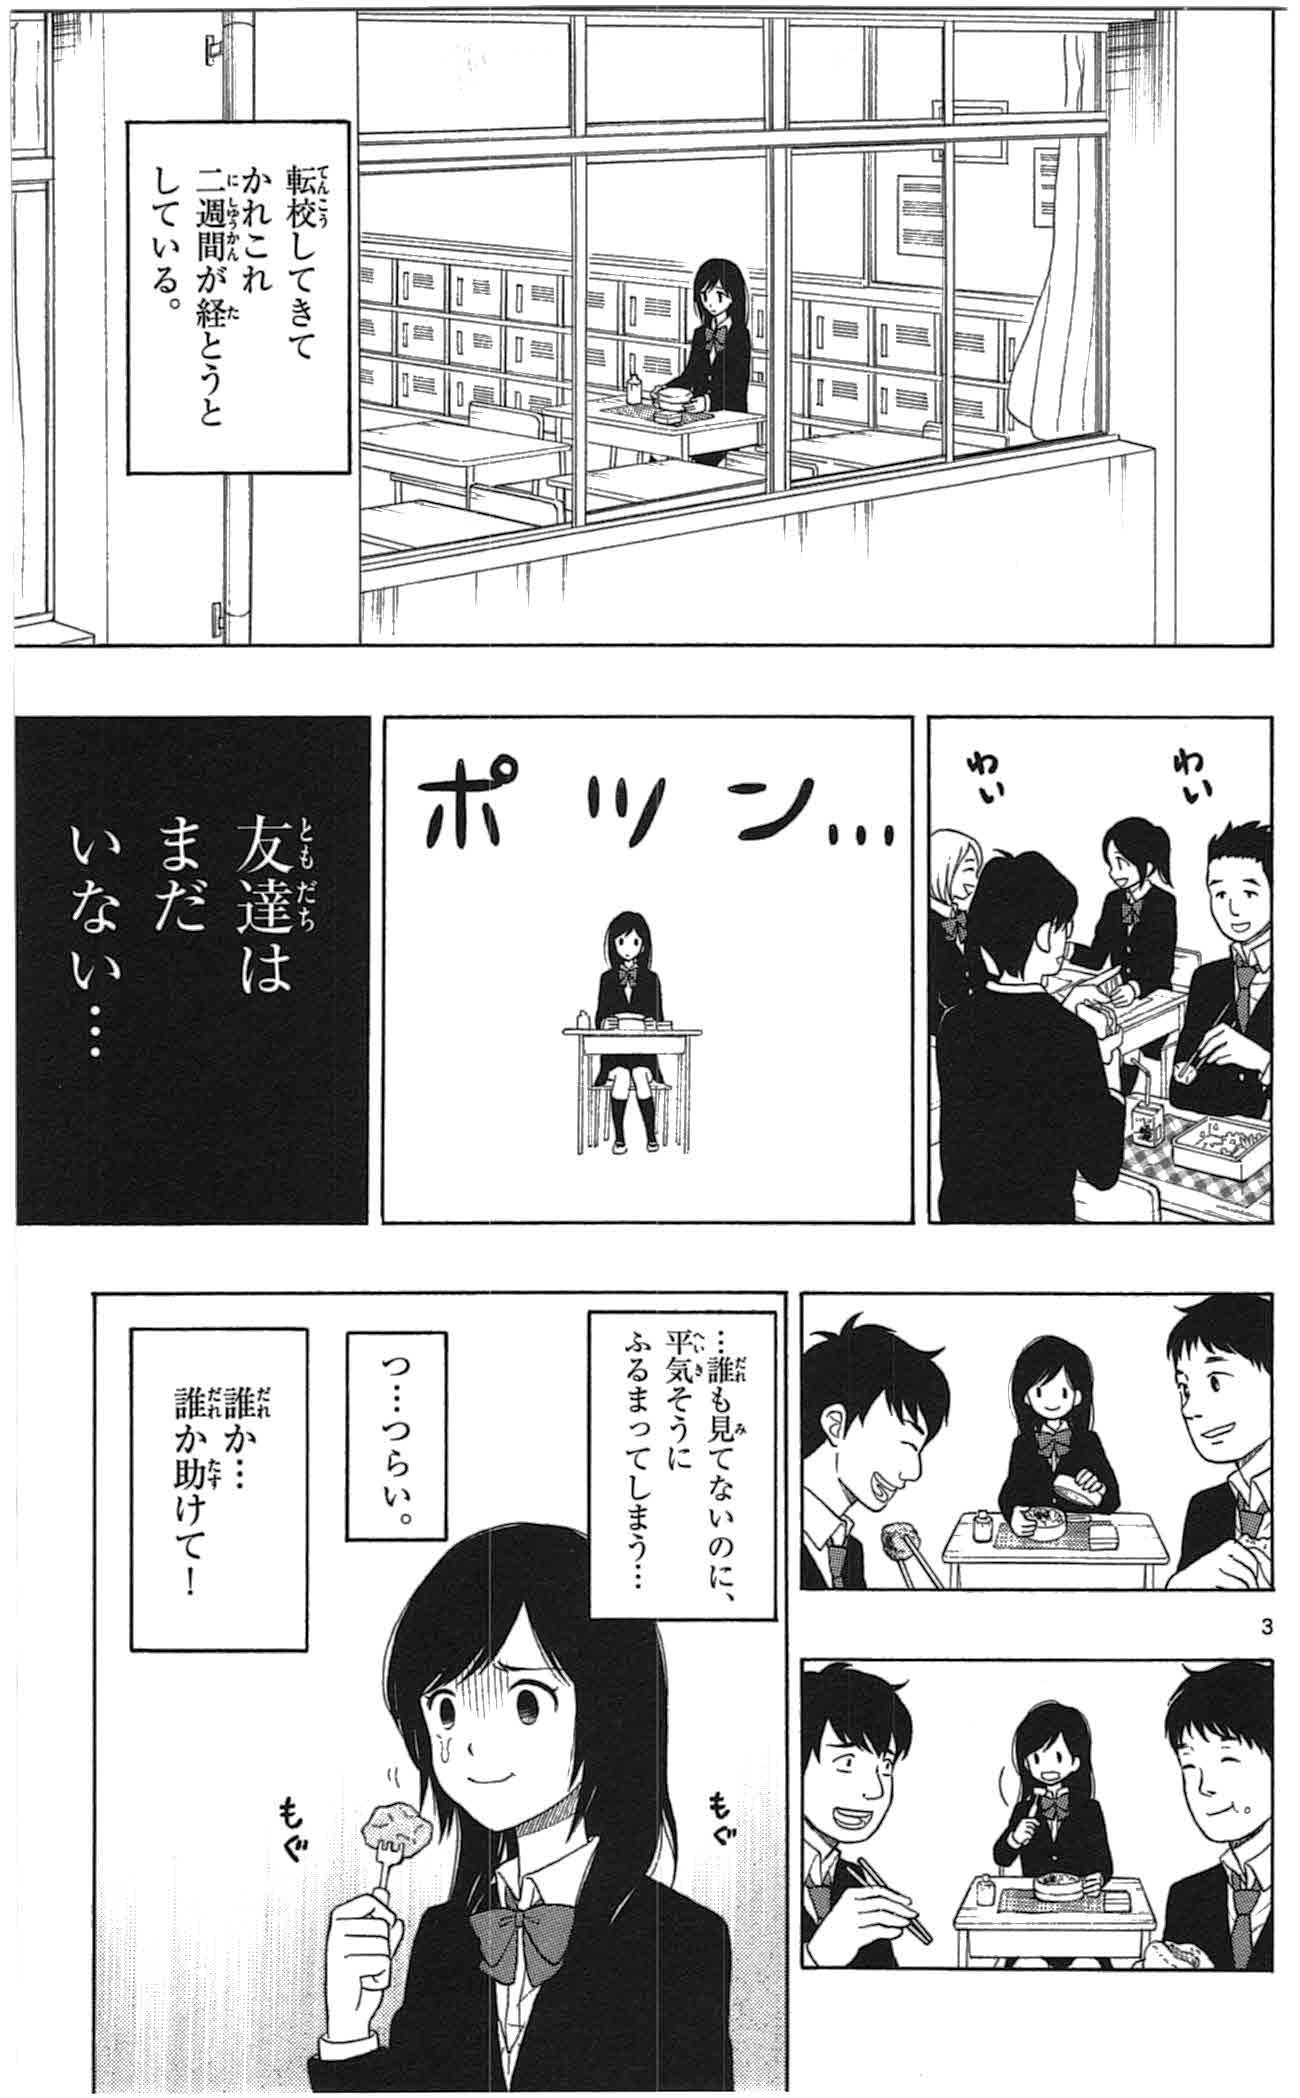 Yugami-kun ni wa Tomodachi ga Inai - Chapter 002 - Page 3